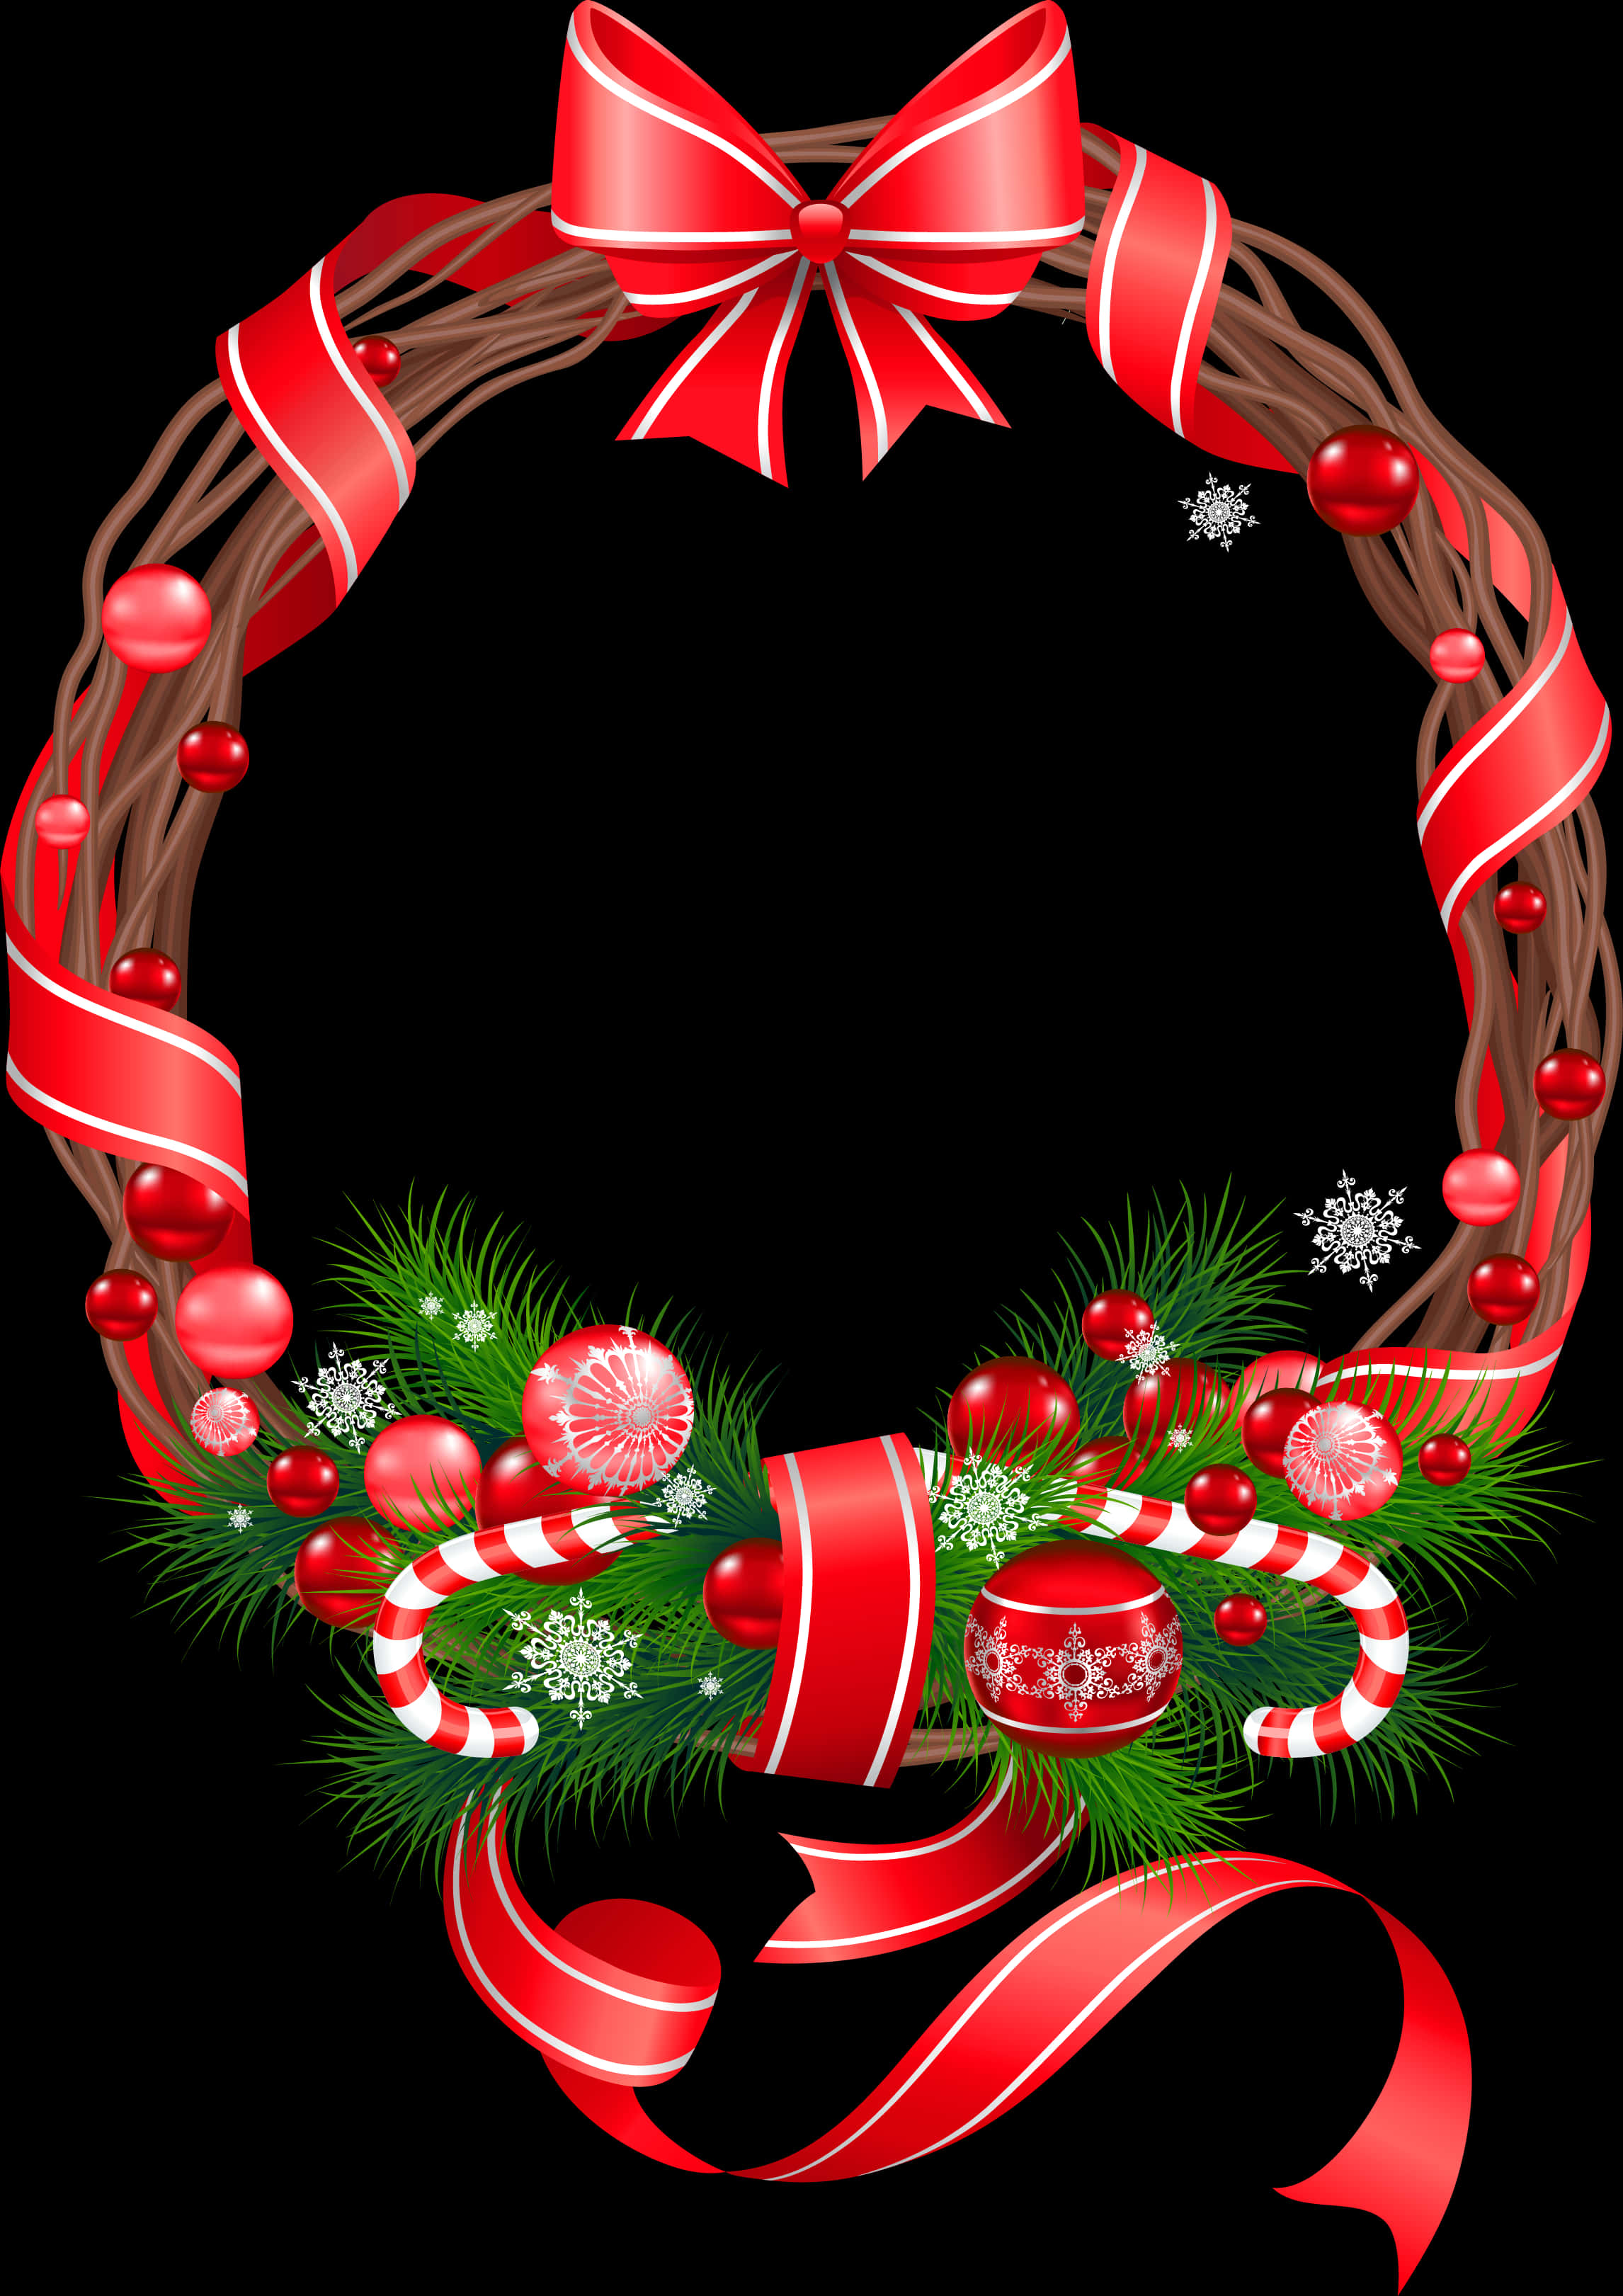 Festive Christmas Wreath Decoration